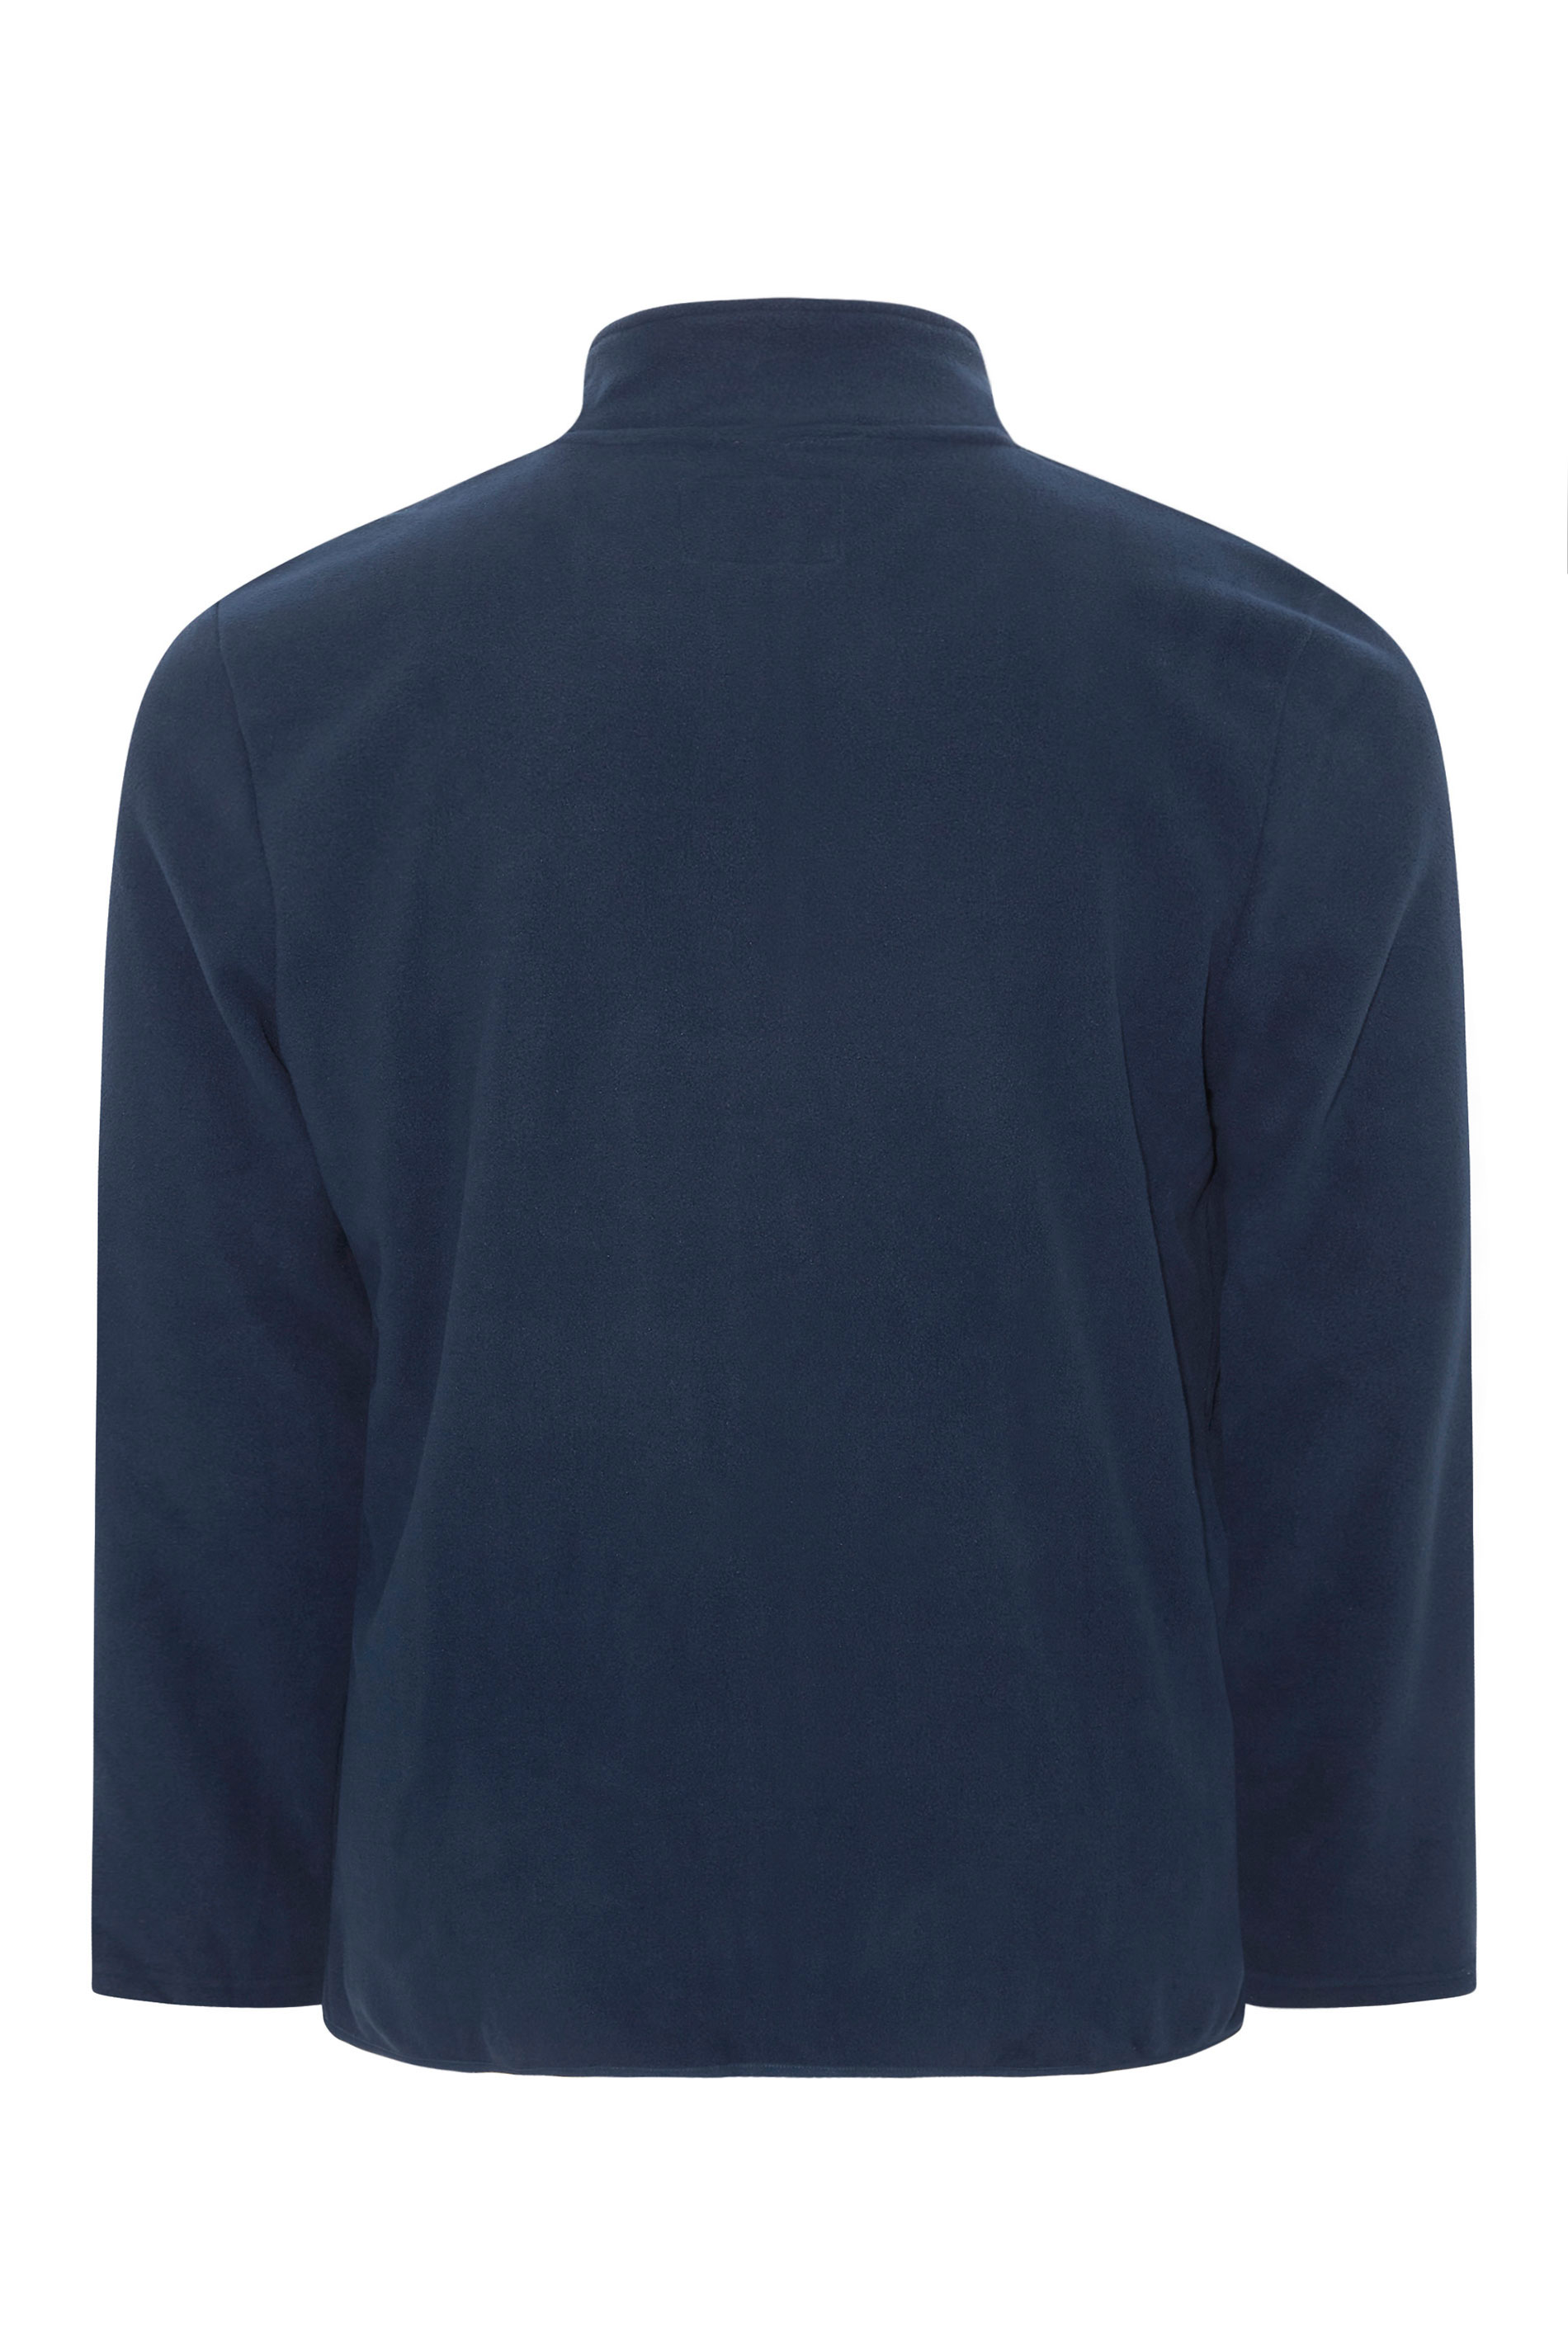 BadRhino Navy Blue Essential Zip Through Fleece | BadRhino 3